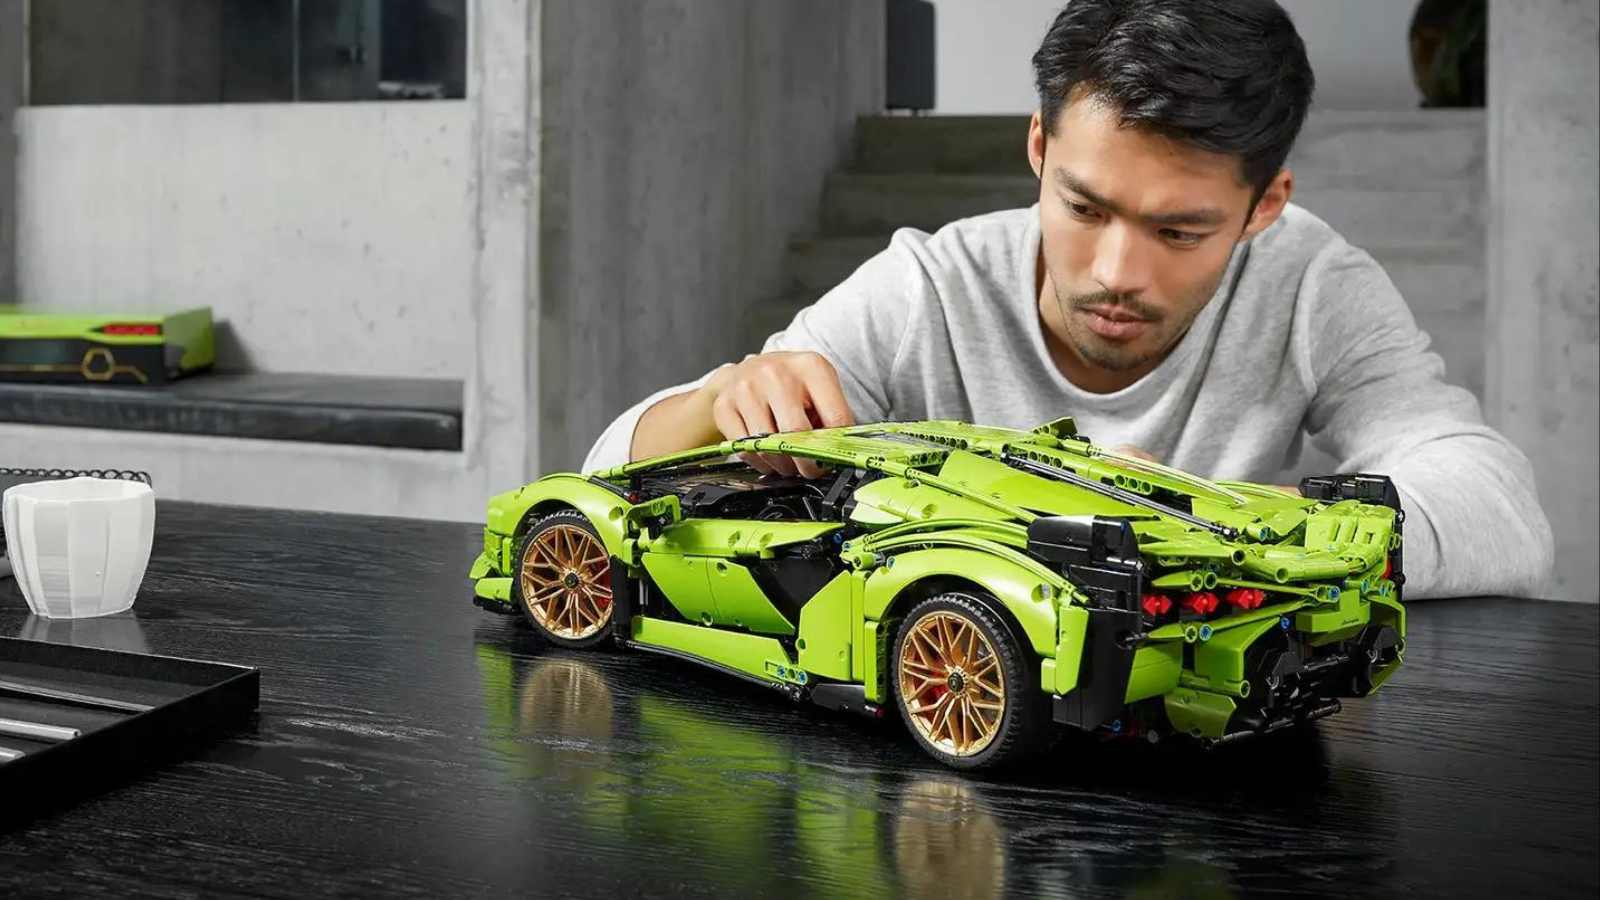 LEGO Technic получает скидку до 22% на Amazon: Ford Mustang, Porsche и другие модели